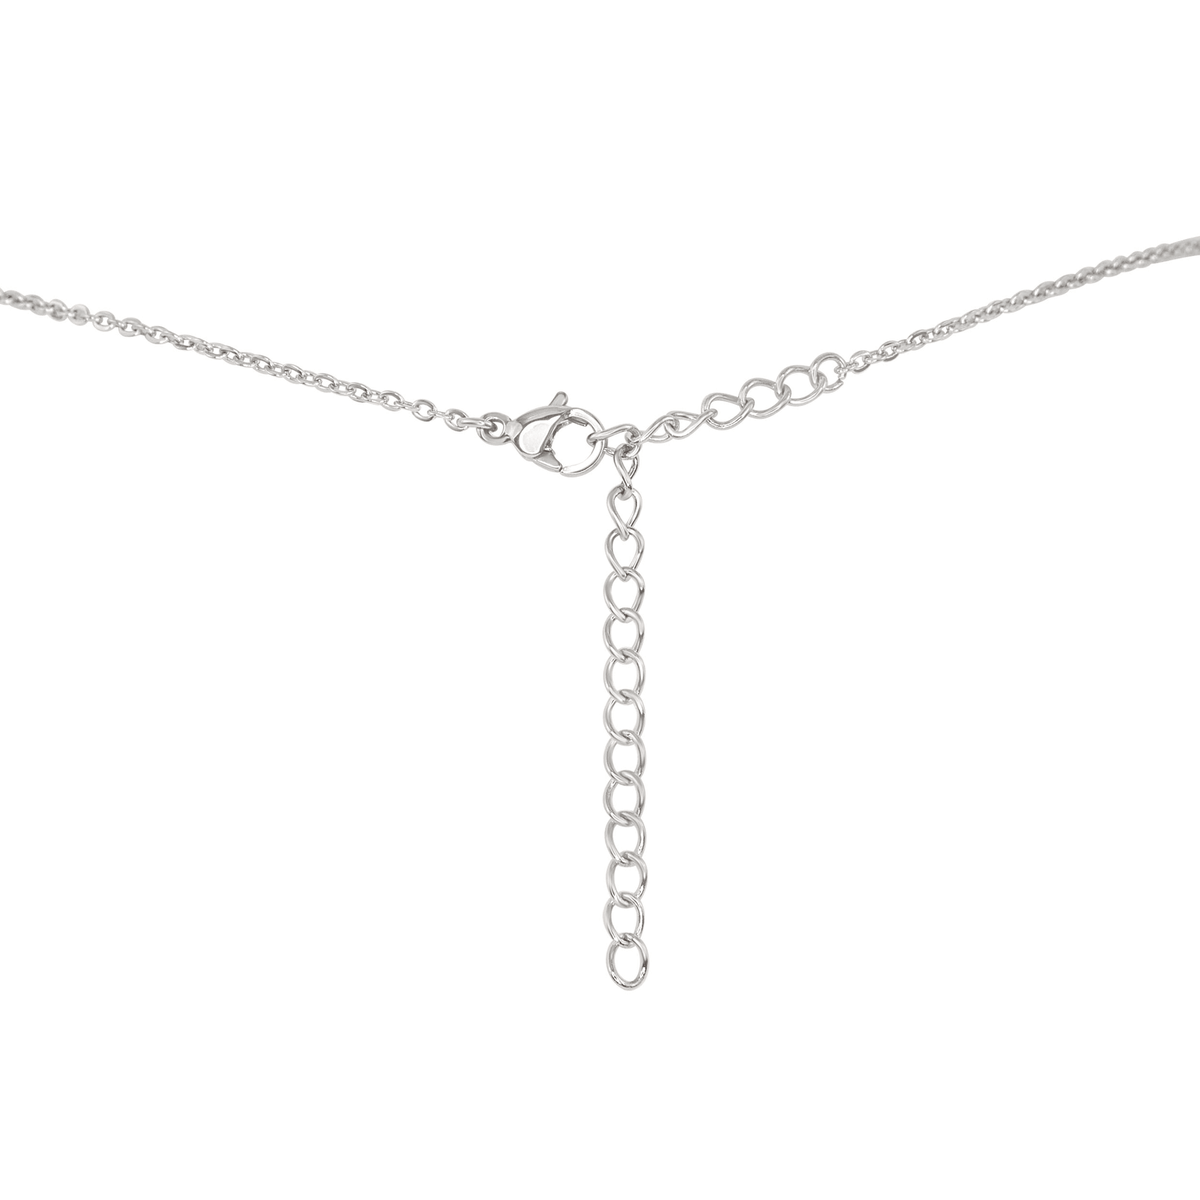 Tiny Raw Rose Quartz Pendant Necklace - Tiny Raw Rose Quartz Pendant Necklace - 14k Gold Fill / Cable - Luna Tide Handmade Crystal Jewellery